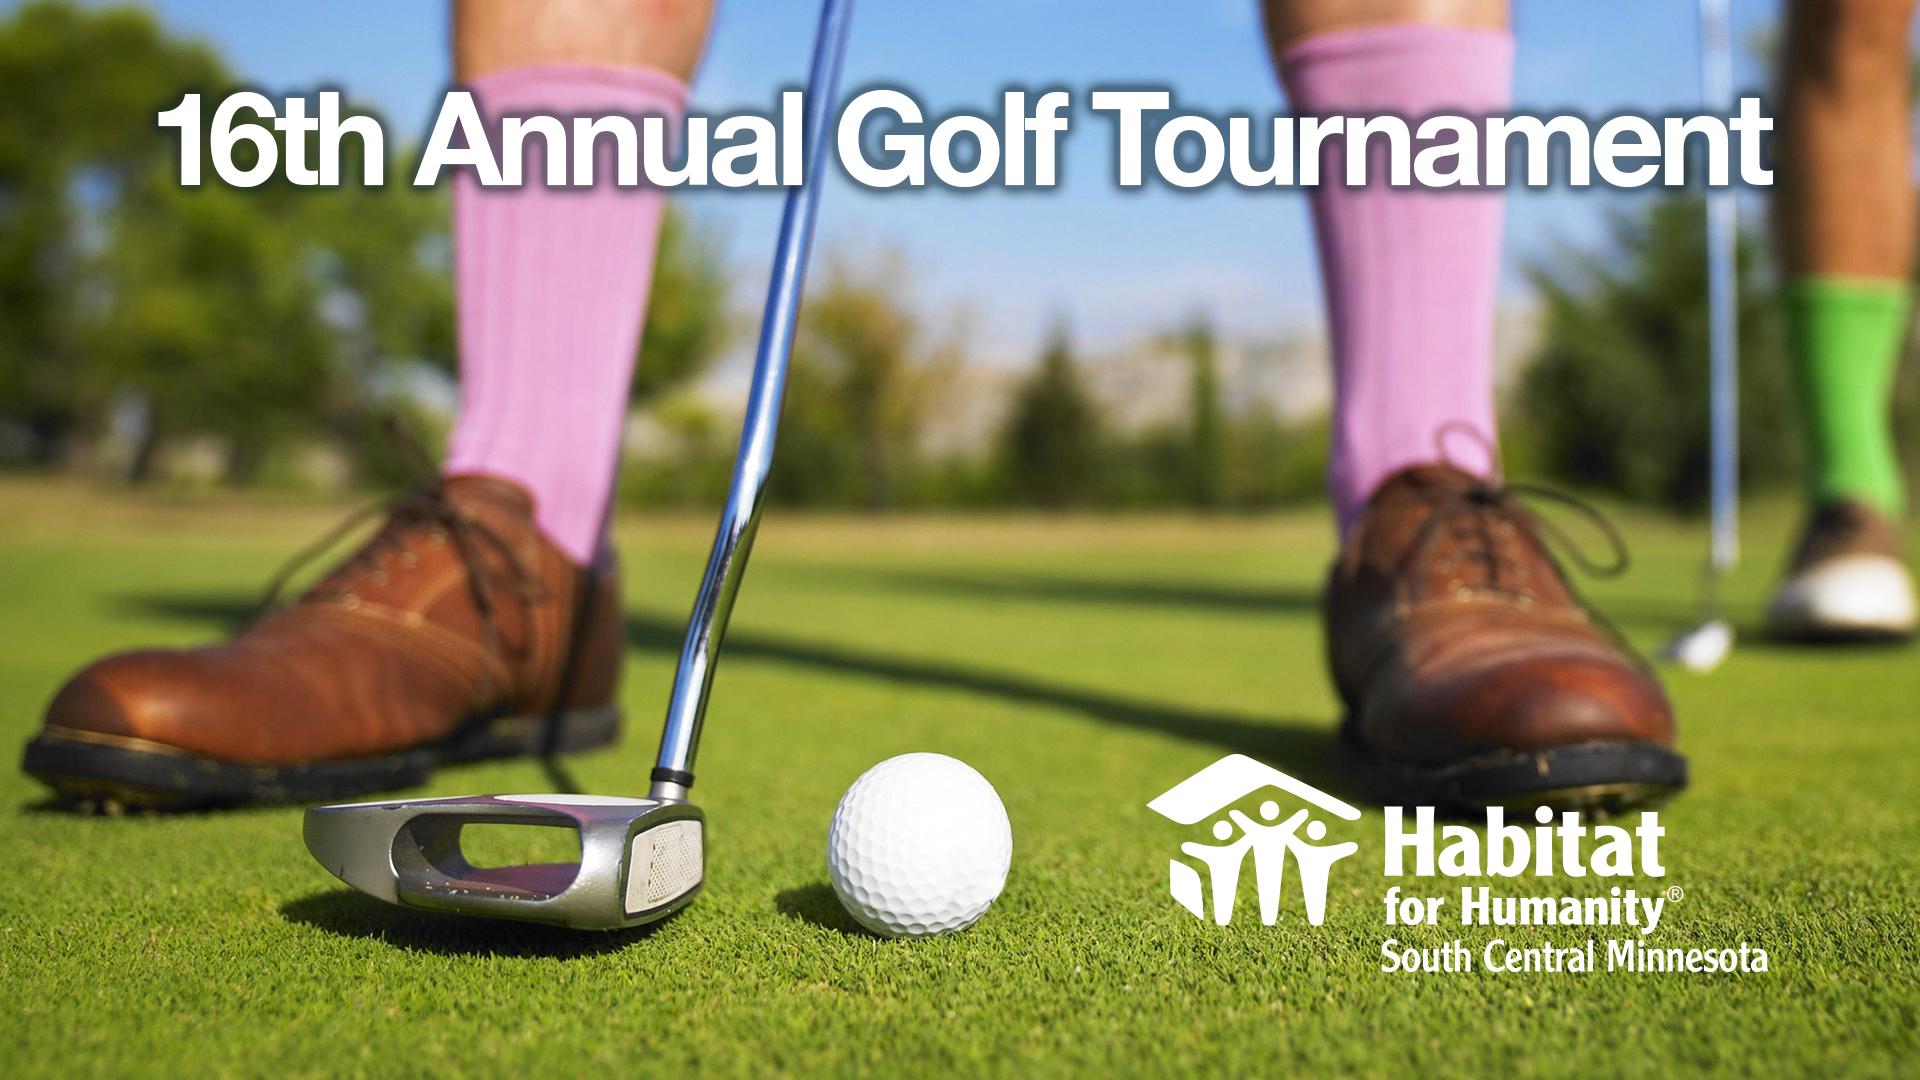 Habitat for Humanity SCMN 16th Annual Golf Tournament